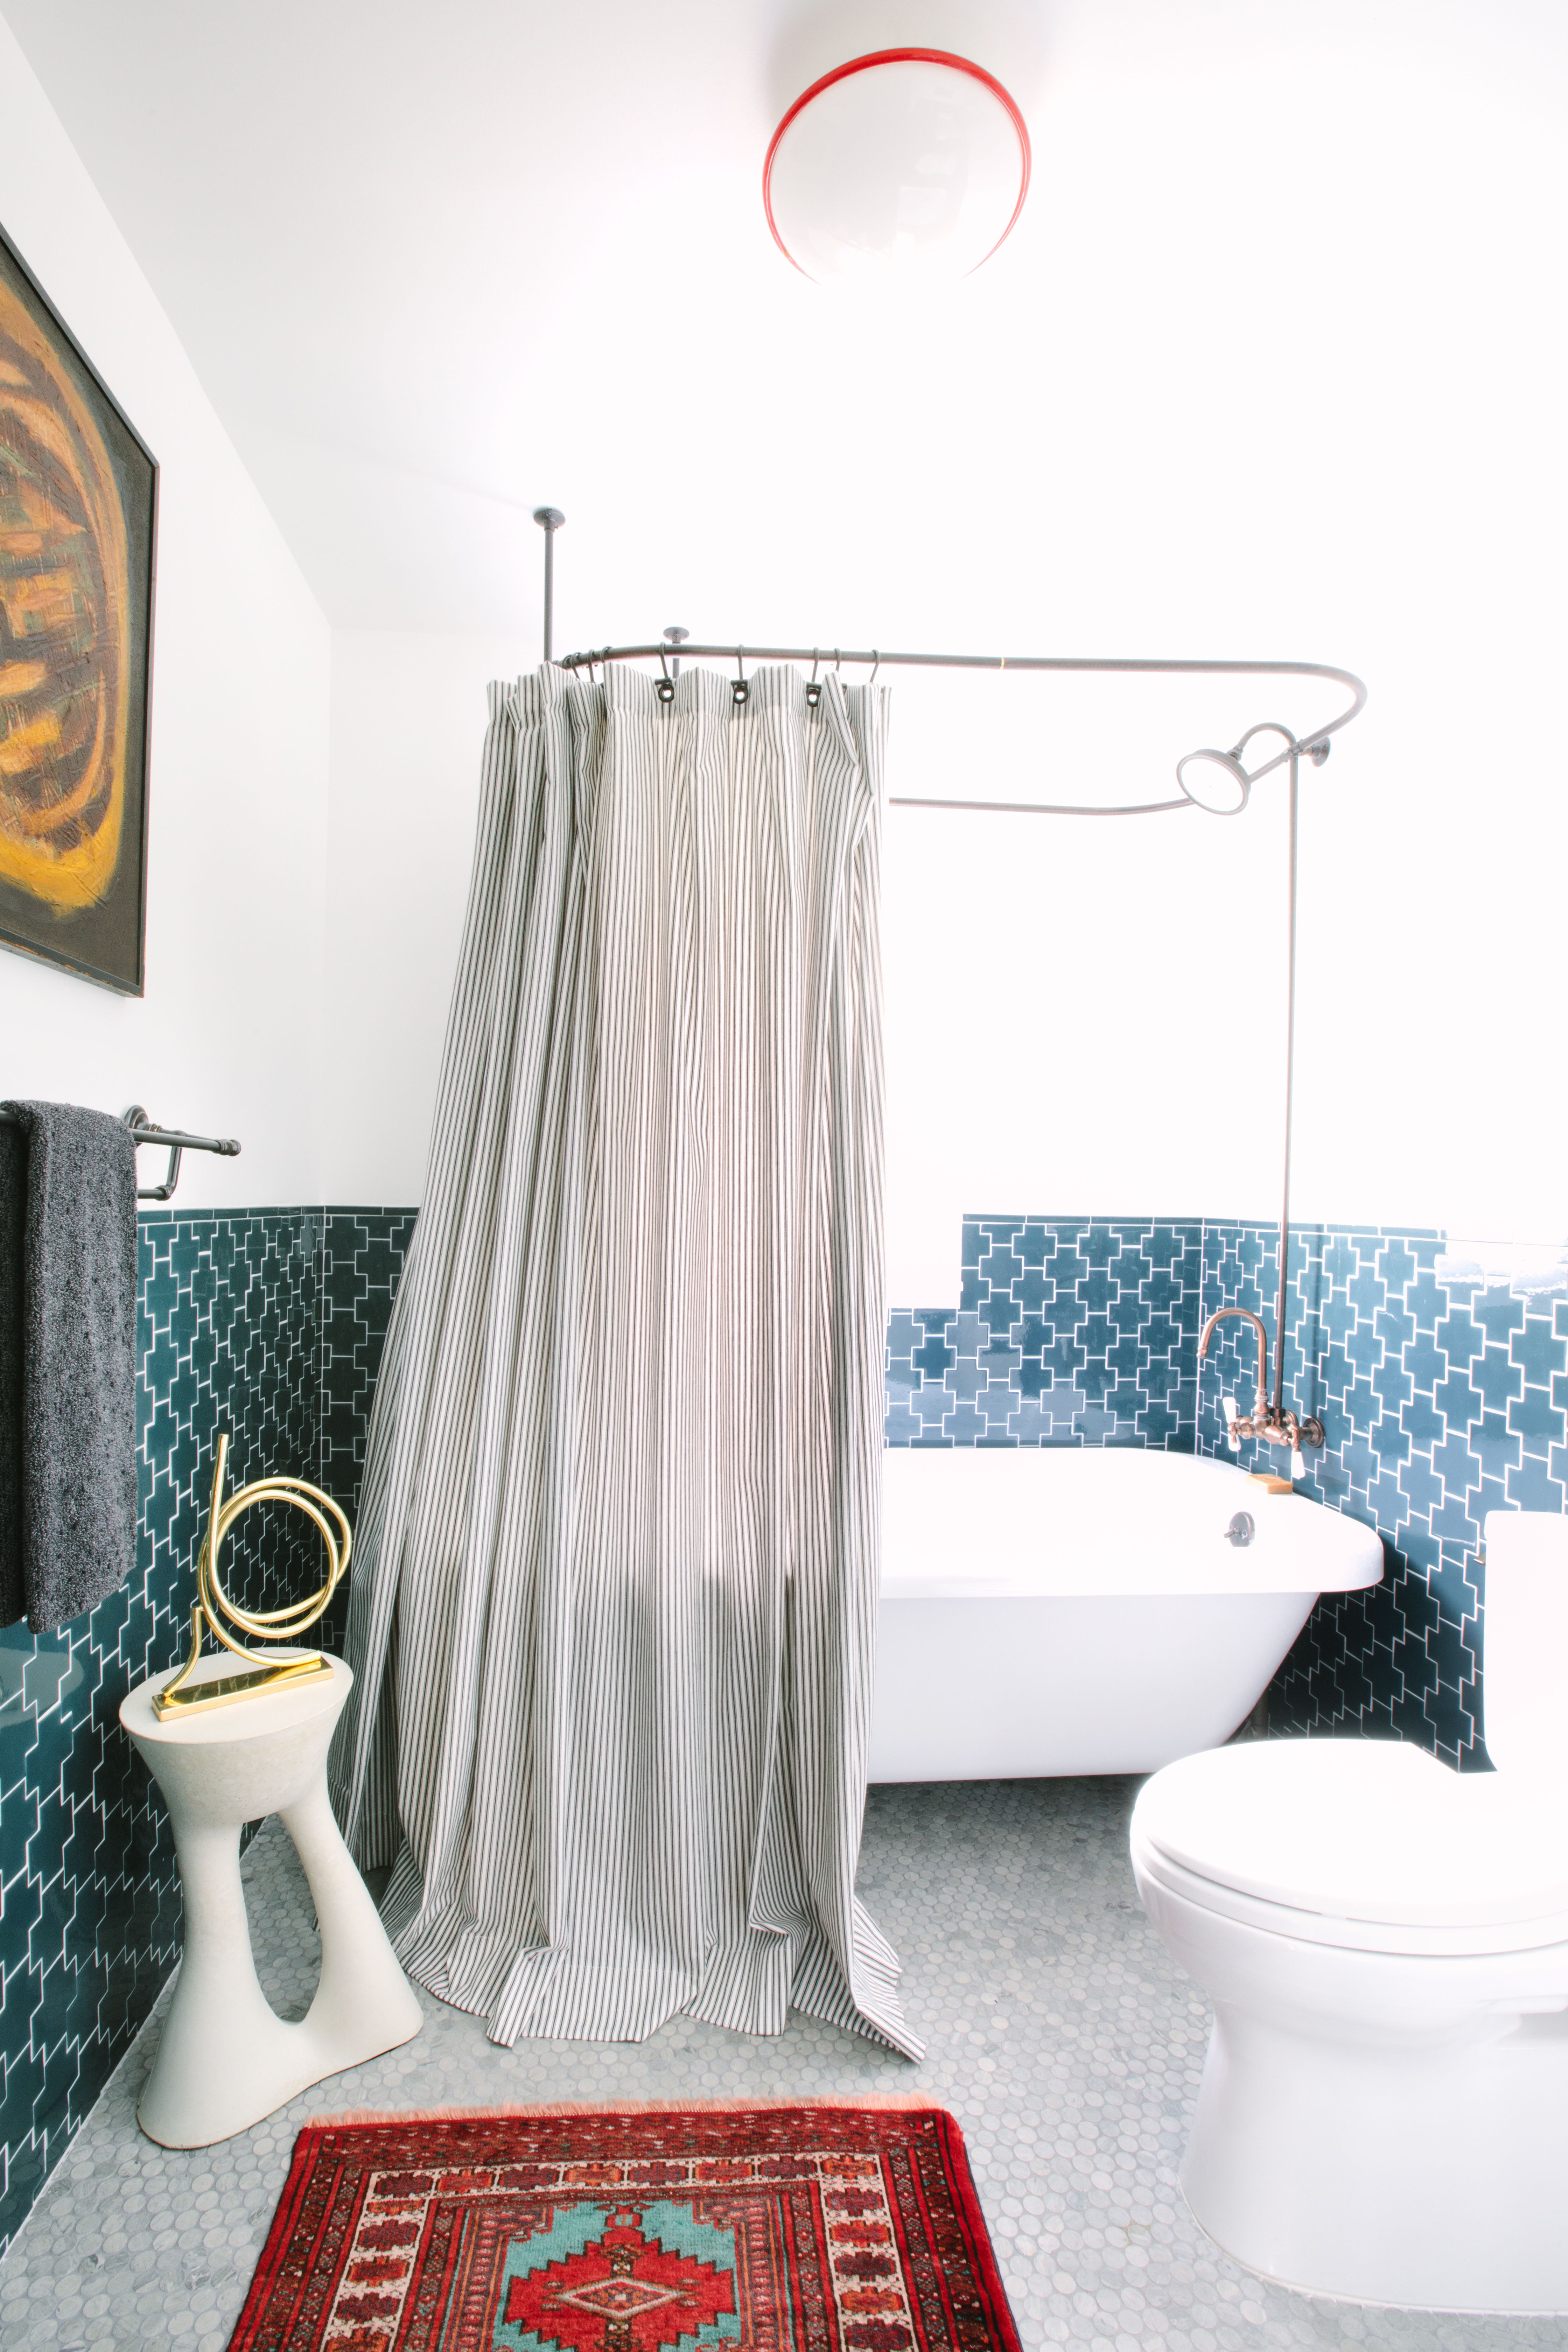 Best of Bathroom shower photoshoot ideas